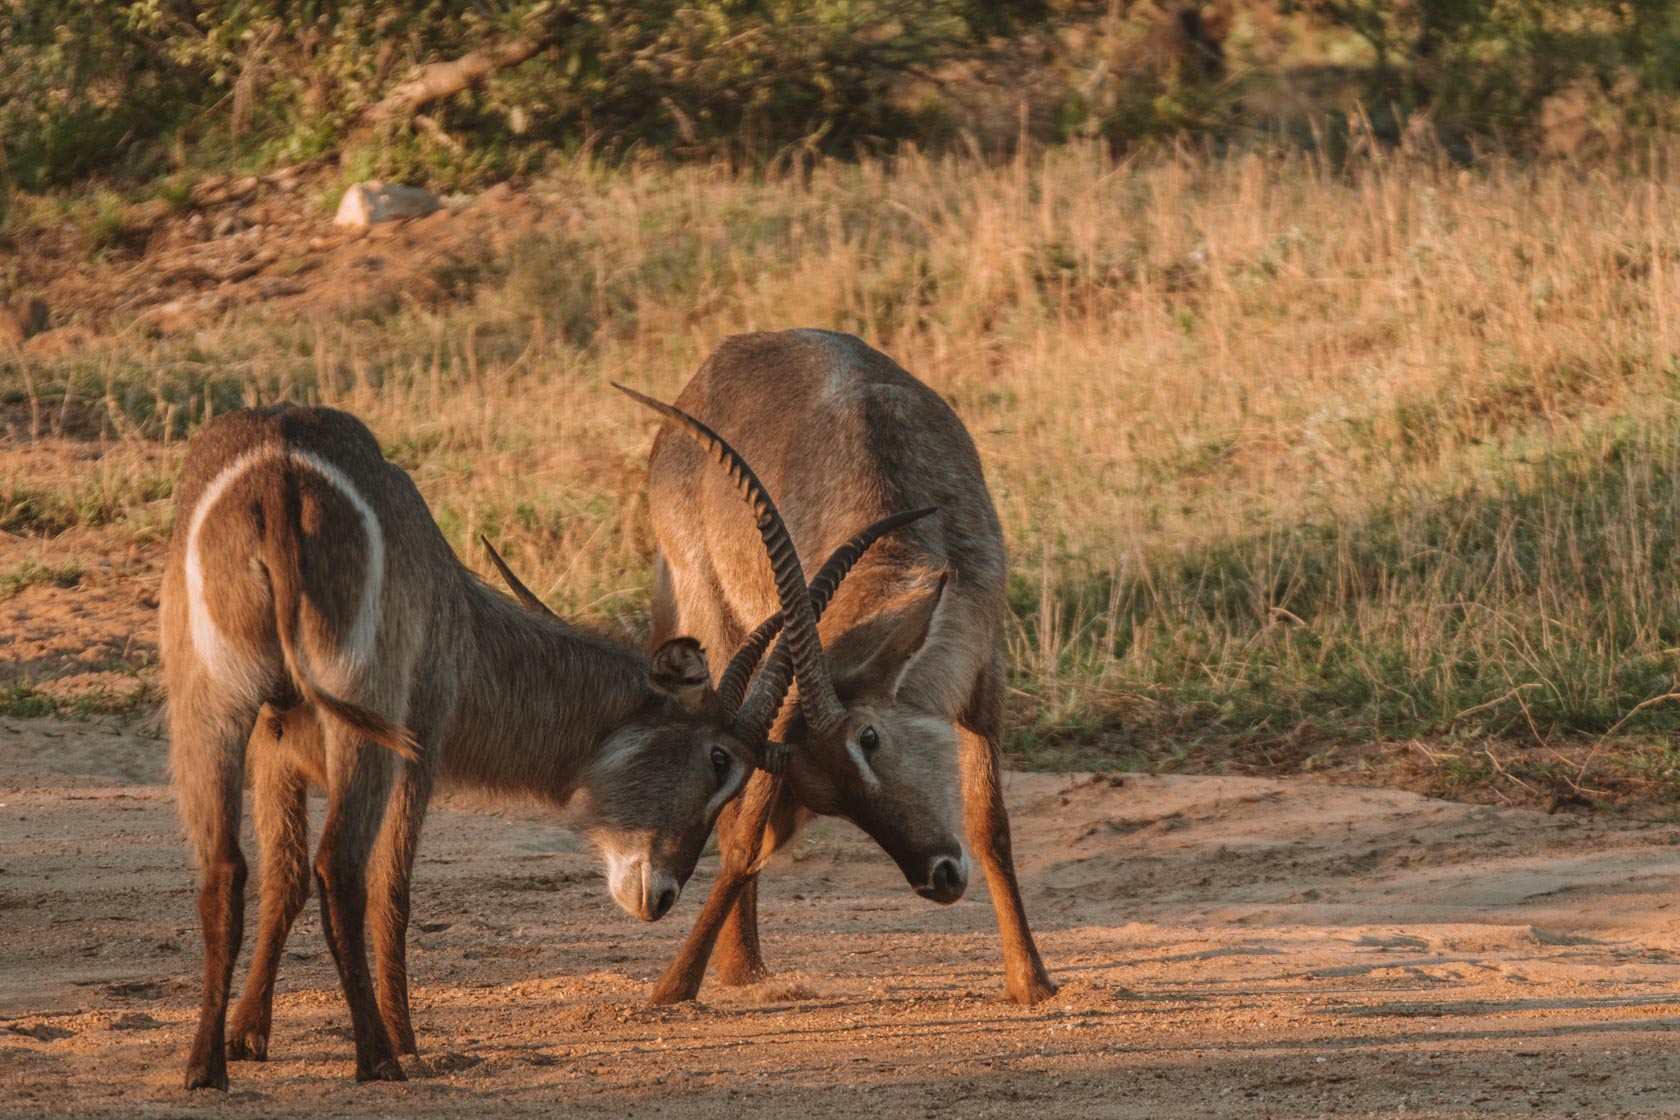 Bushbucks sparring at sunrise